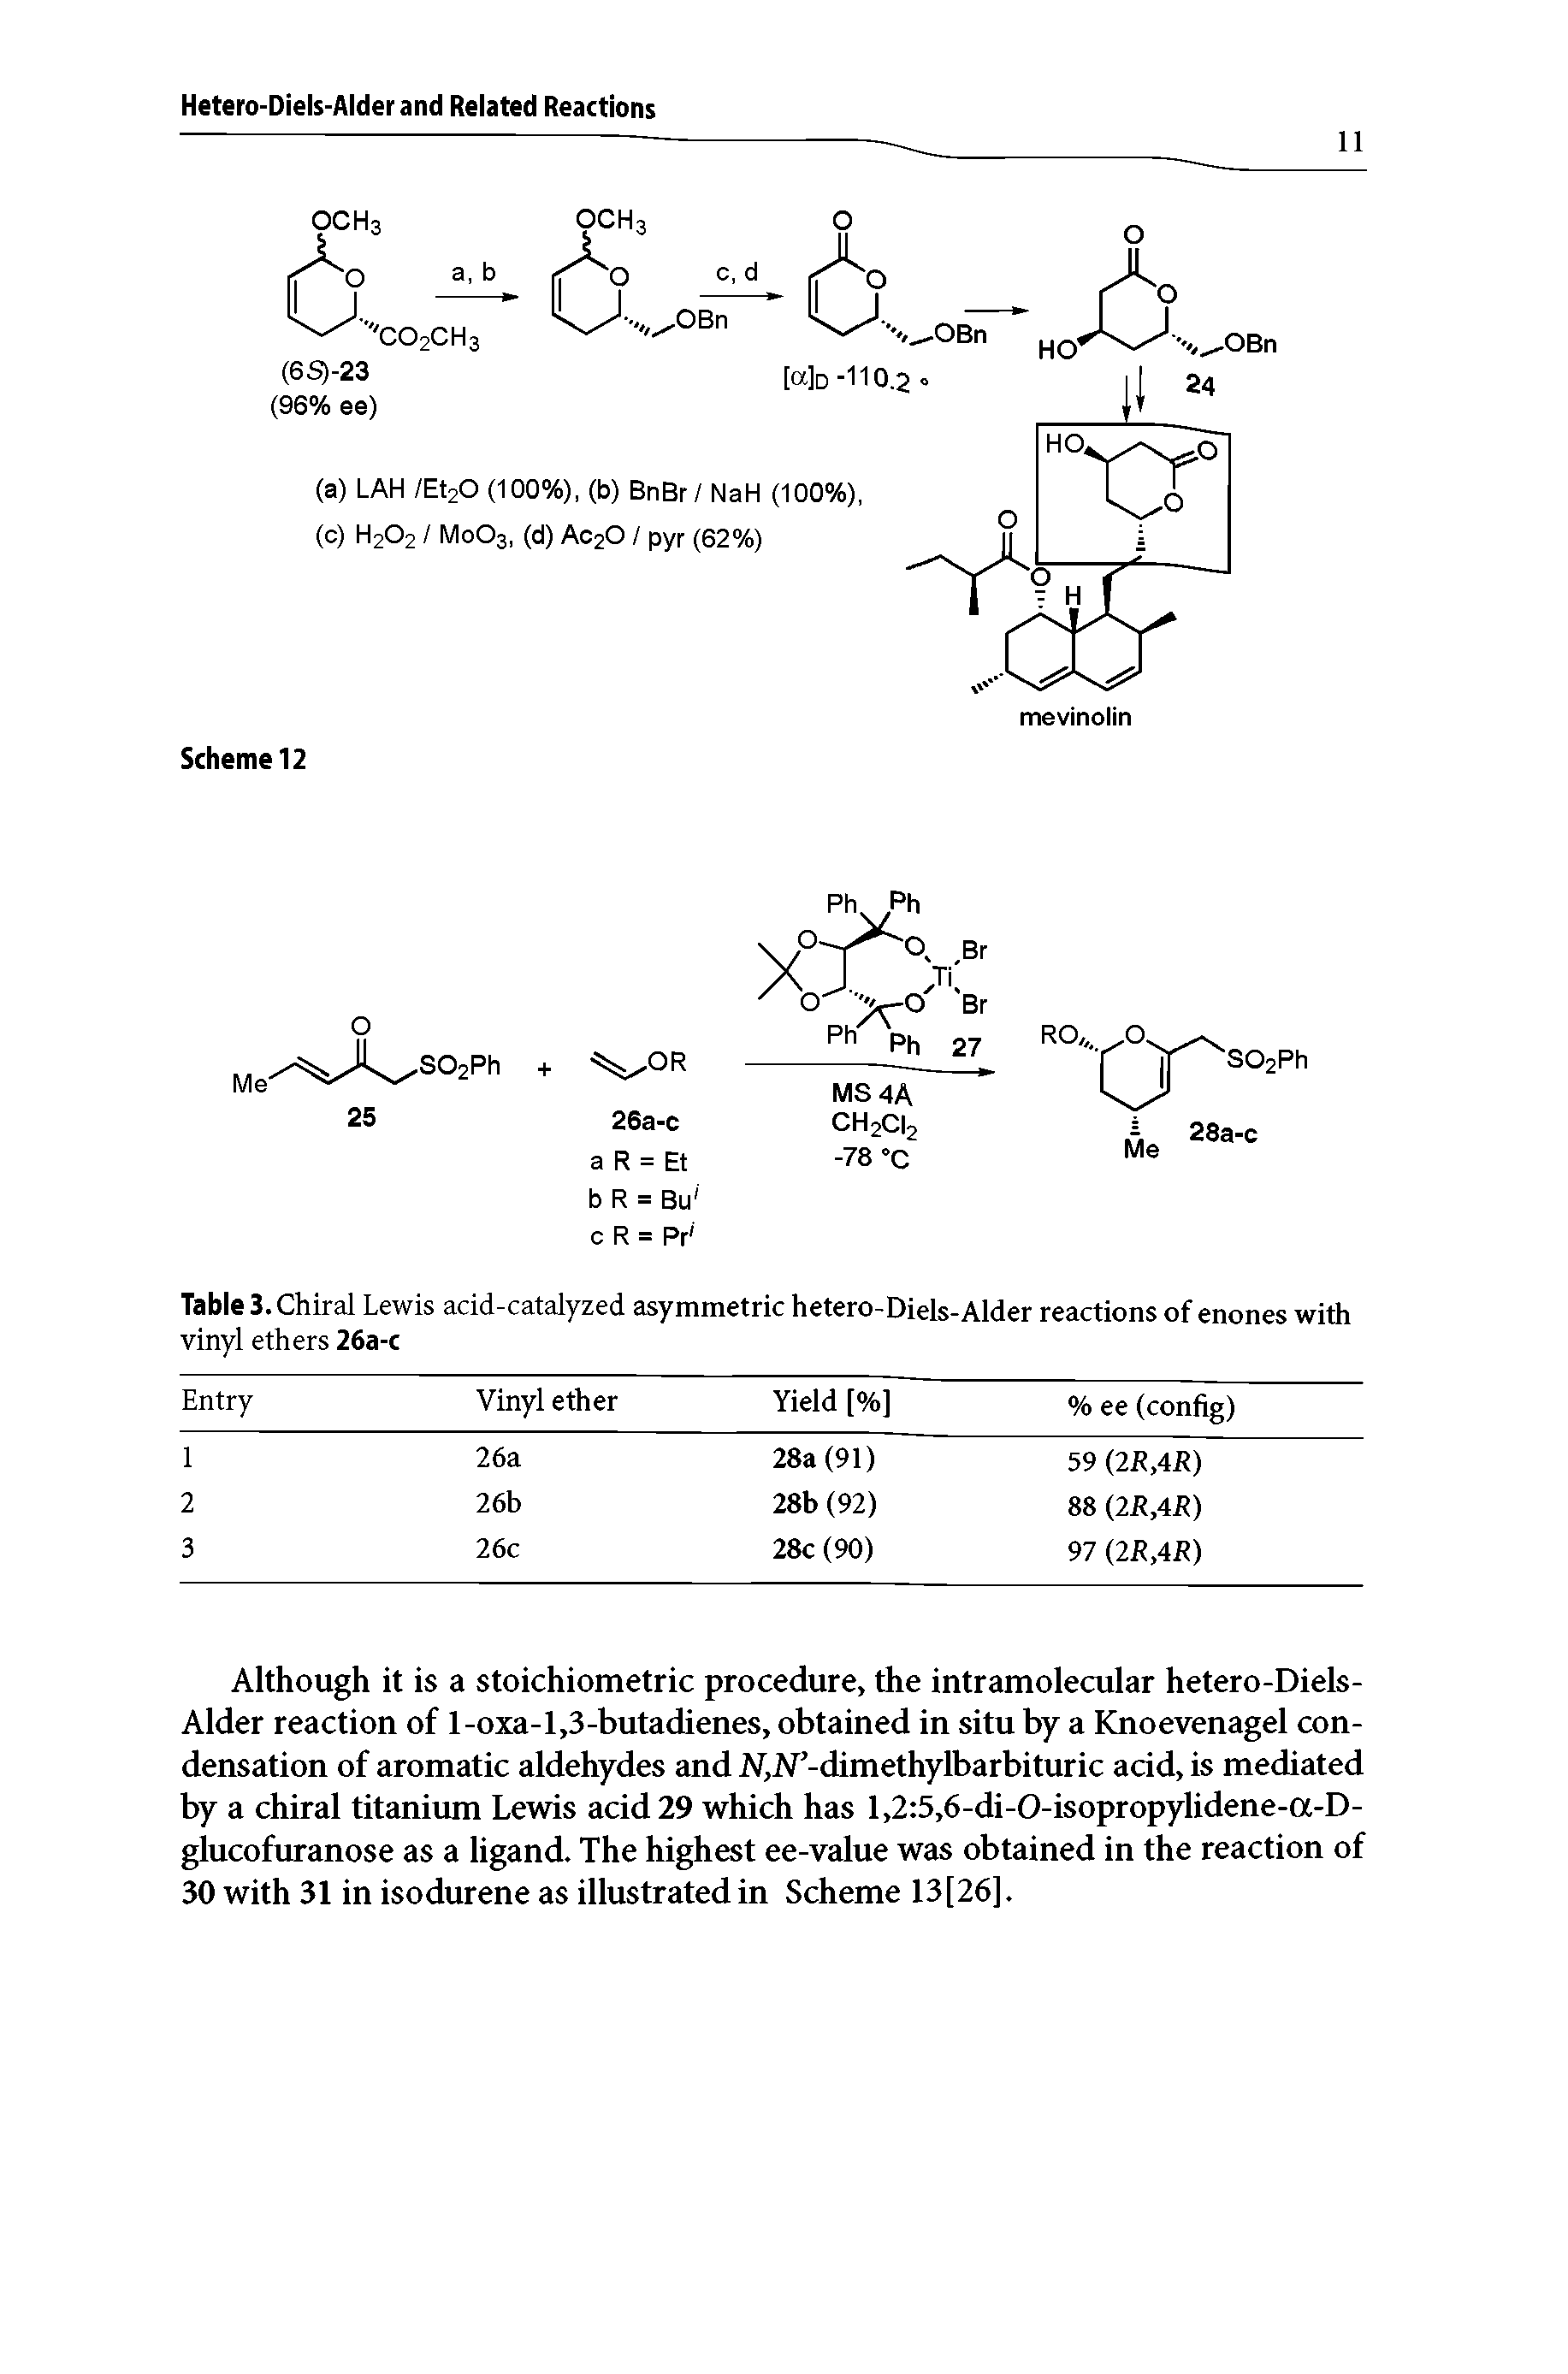 Table 3. Chiral Lewis acid-catalyzed asymmetric hetero-Diels-Alder reactions of enones with vinyl ethers 26a-c...